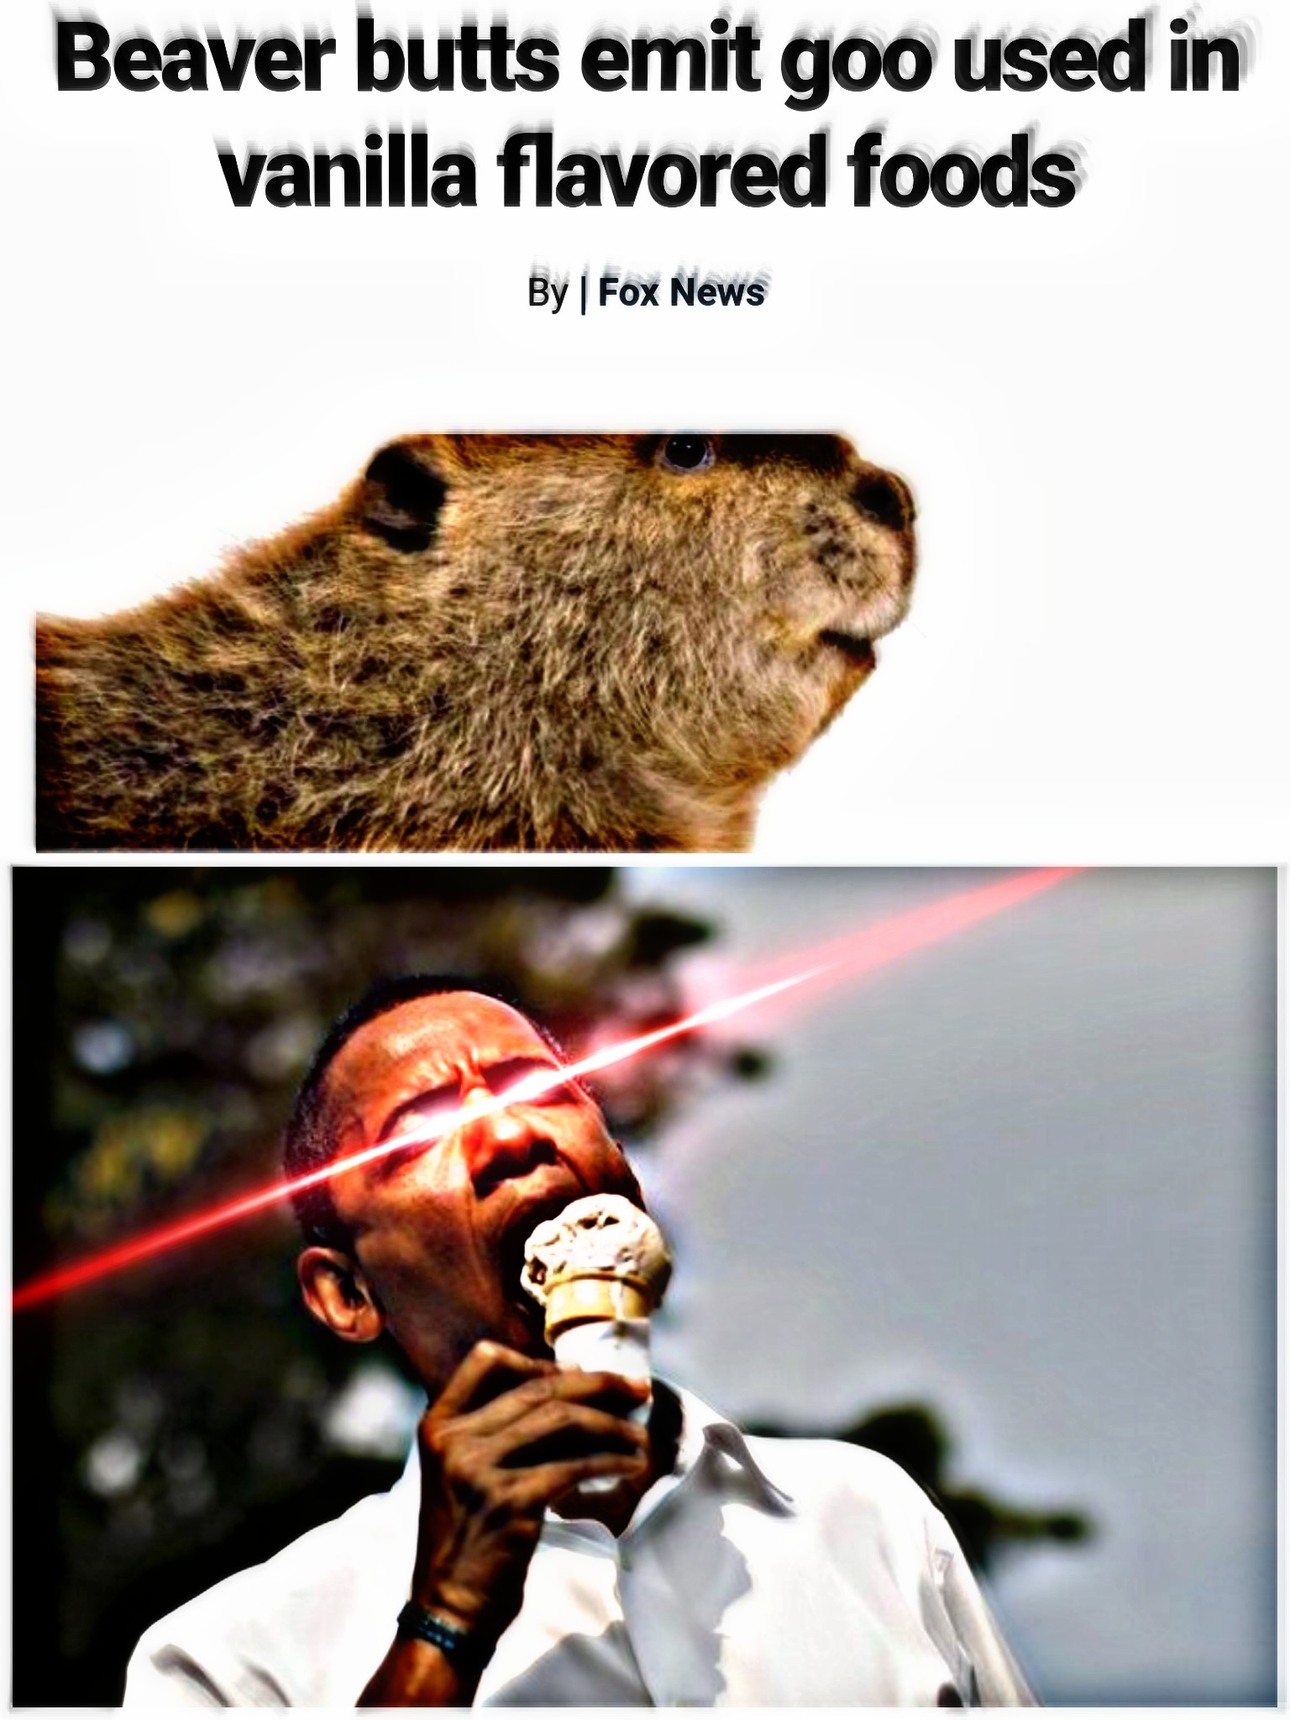 Beaver lickin good - meme